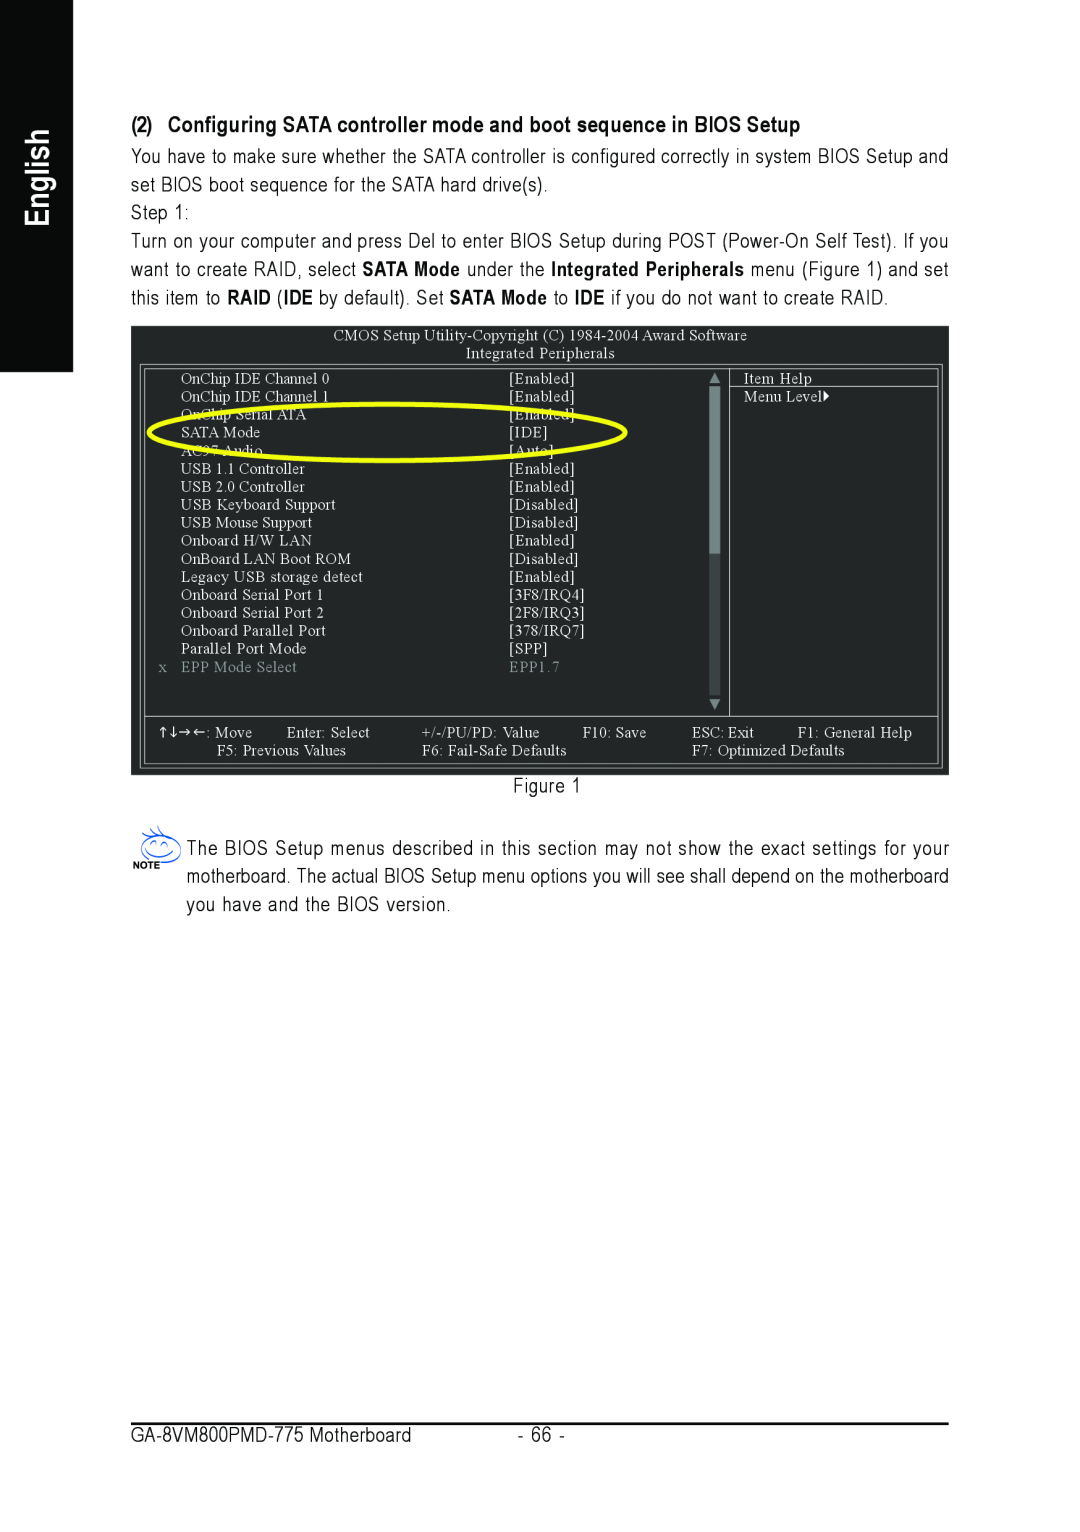 Intel GA-8VM800PMD-775 user manual Configuring SATA controller mode and boot sequence in BIOS Setup, English 